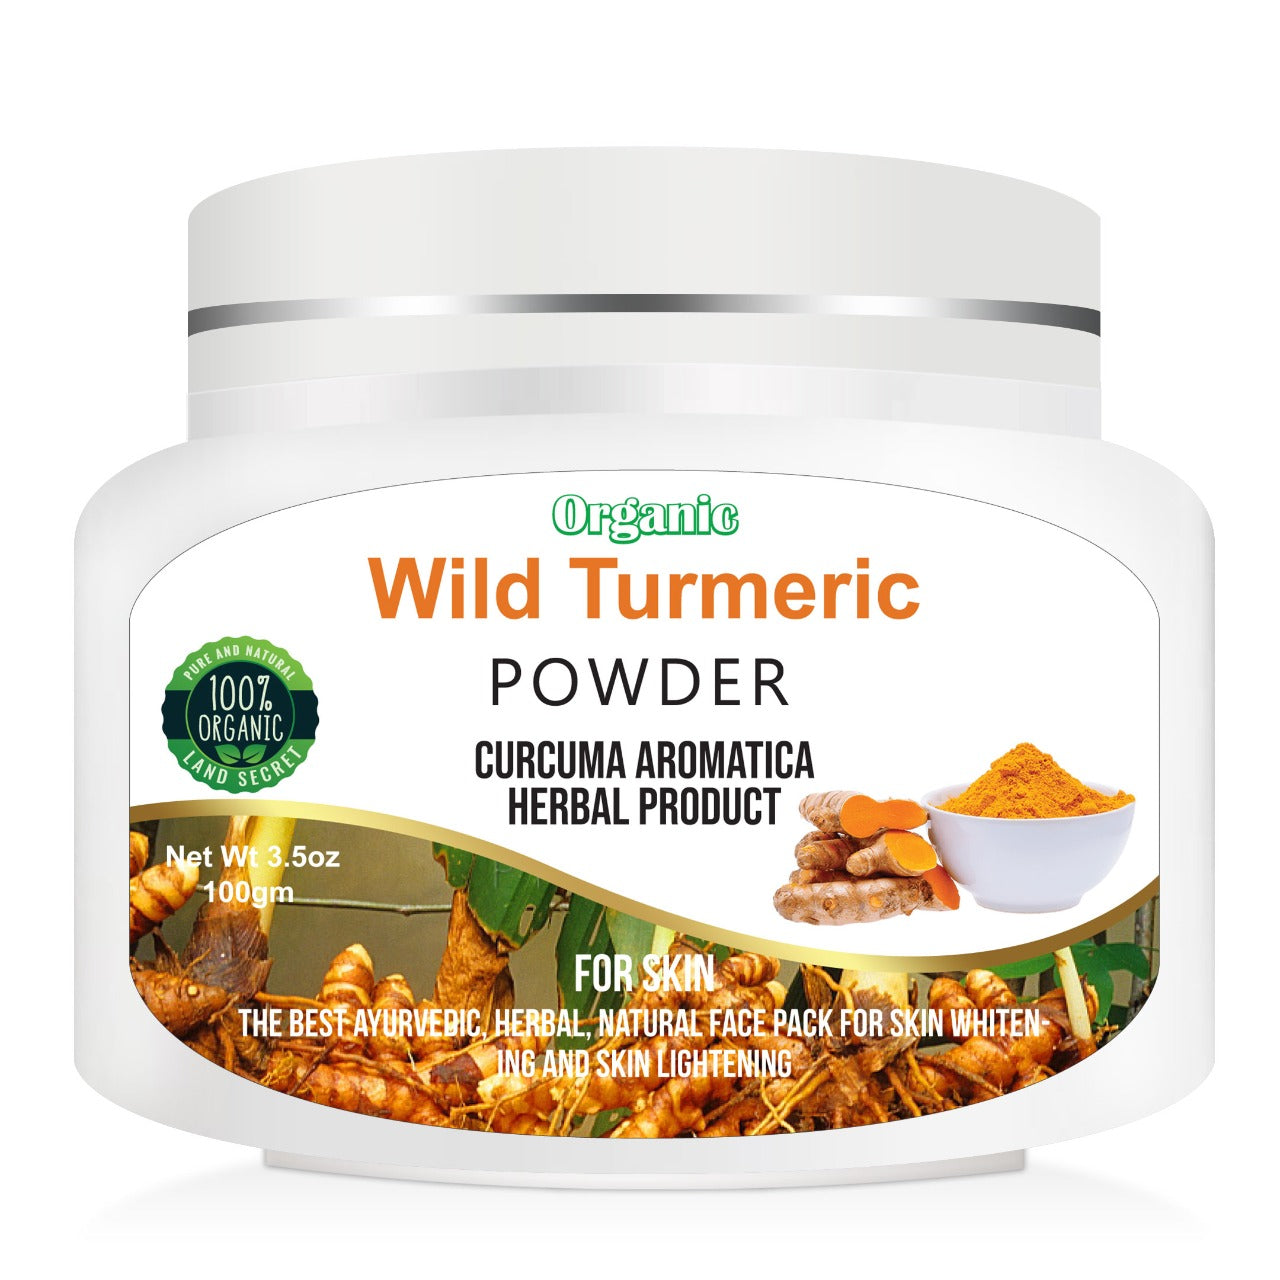 Organic Wild Turmeric powder for face  Kasthuri manjal  Curcuma Aromatica  Amba haldi  Promotes glowing skin 100 GM Land Secret